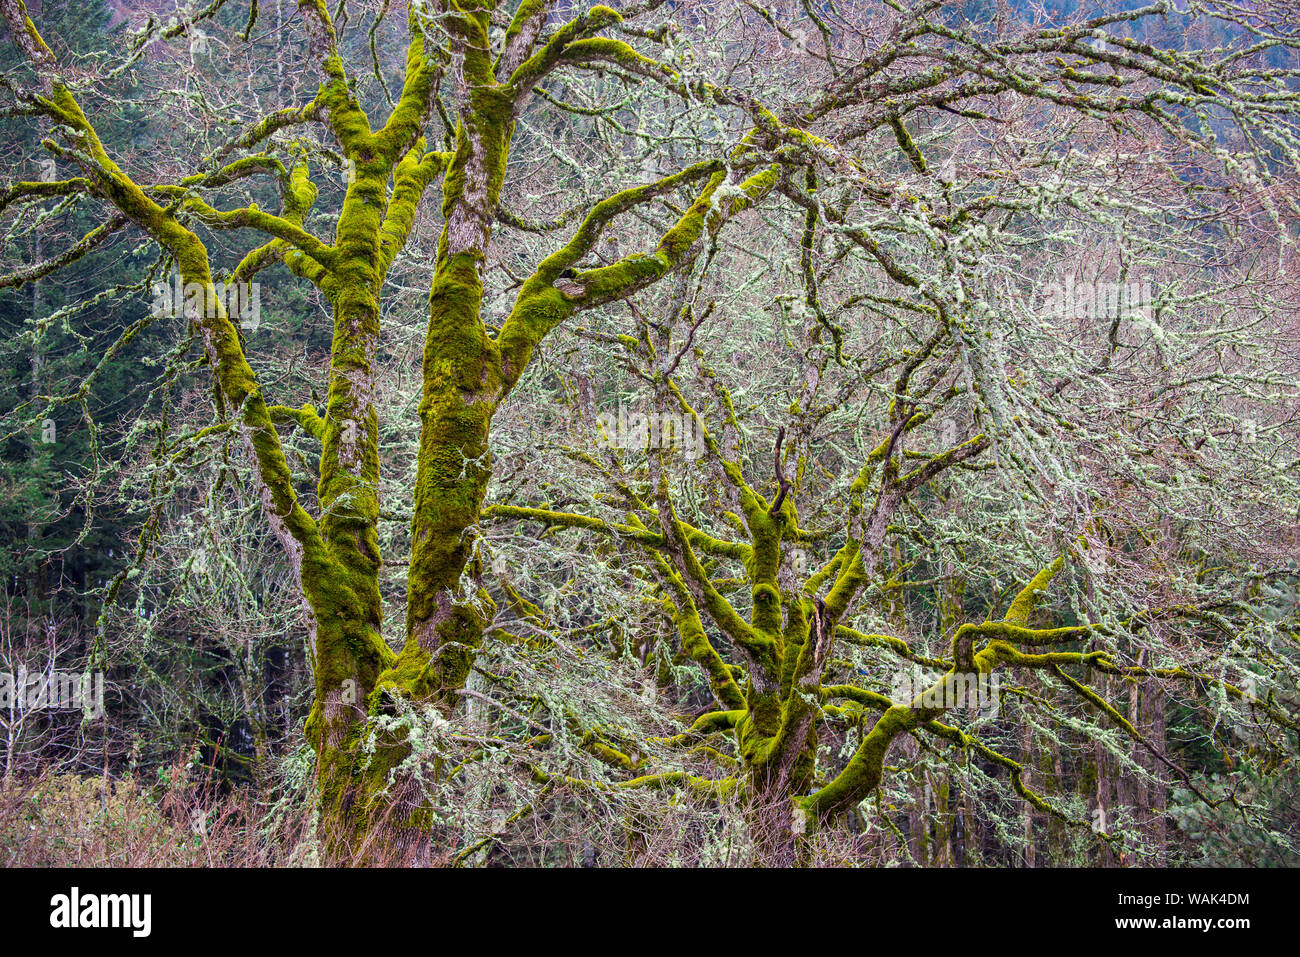 USA, Oregon, Columbia River Gorge National Scenic Area. Moss covered Bigleaf maple trees. Stock Photo